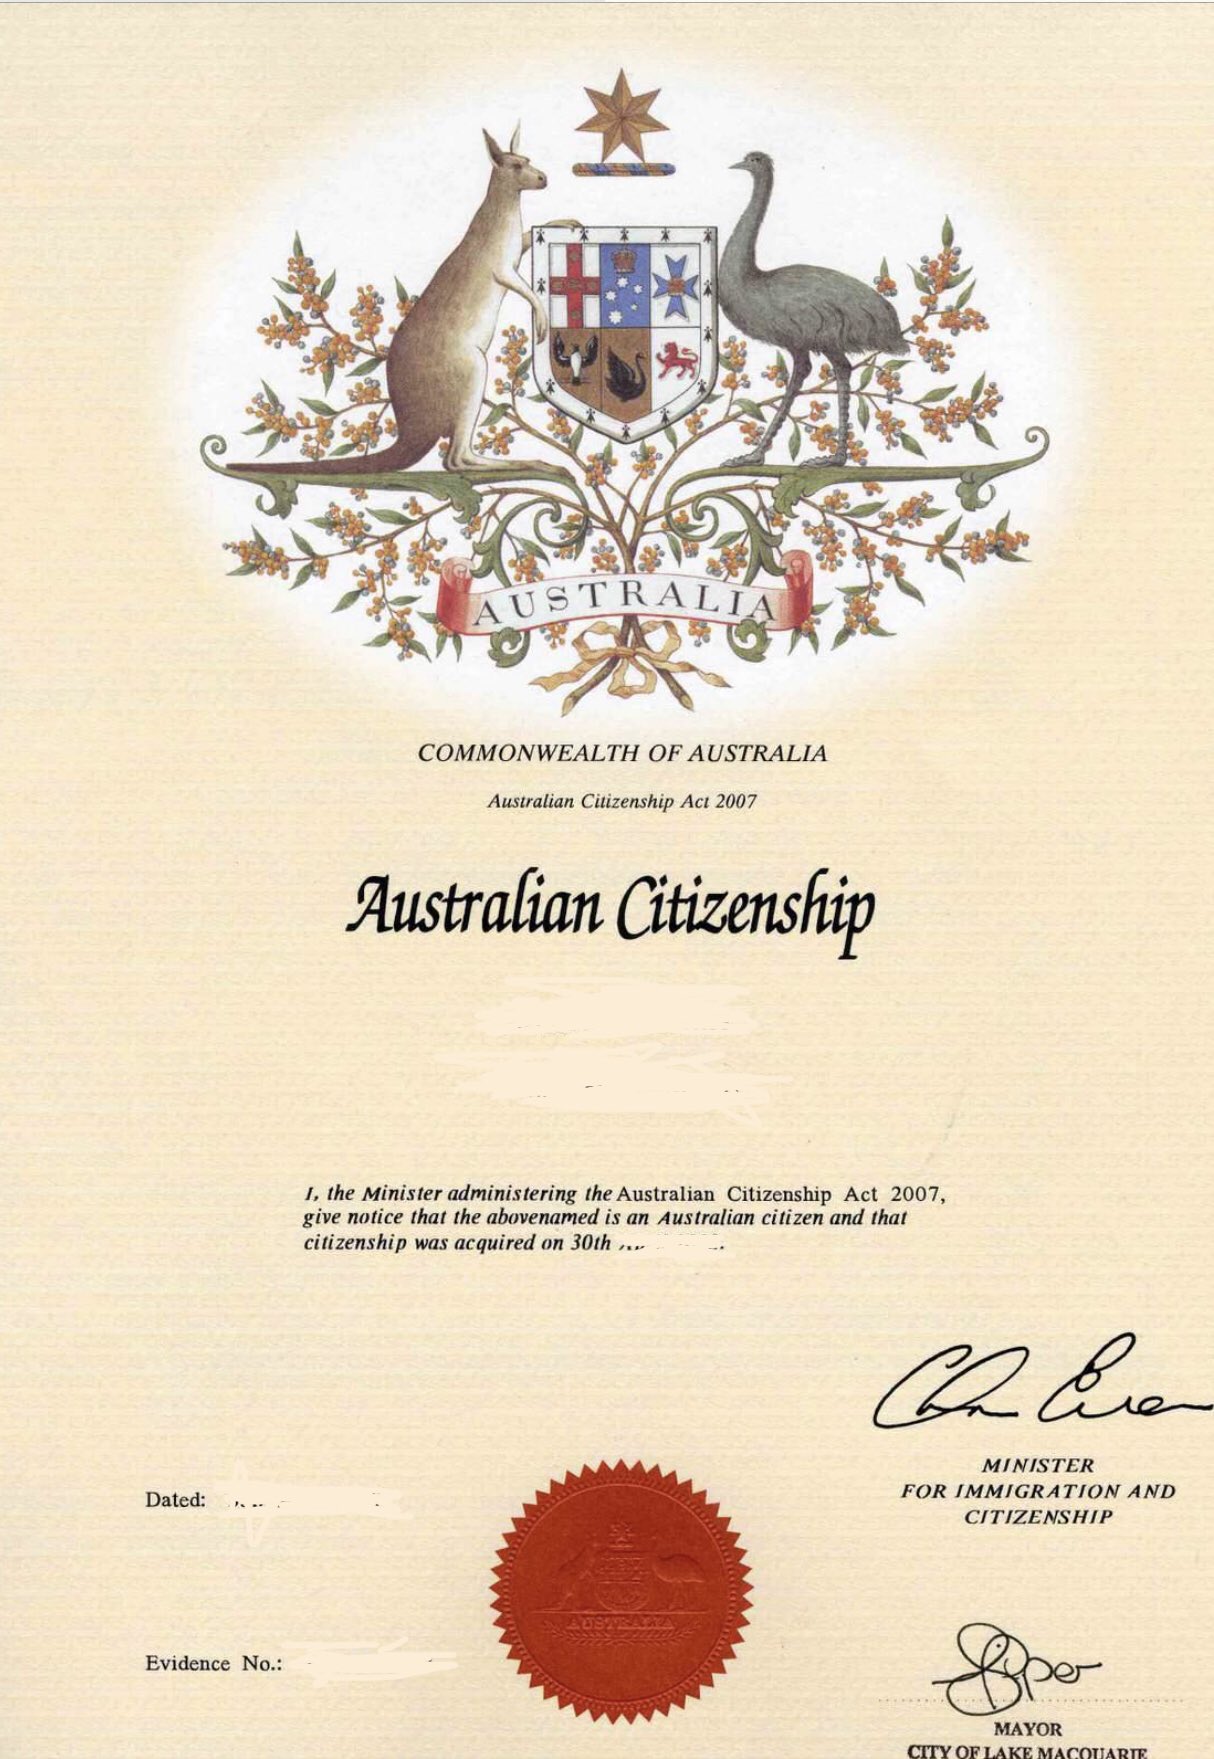 David on Twitter: "Wife got her evidence of Australian Citizenship today. It's a beaut. Twitter